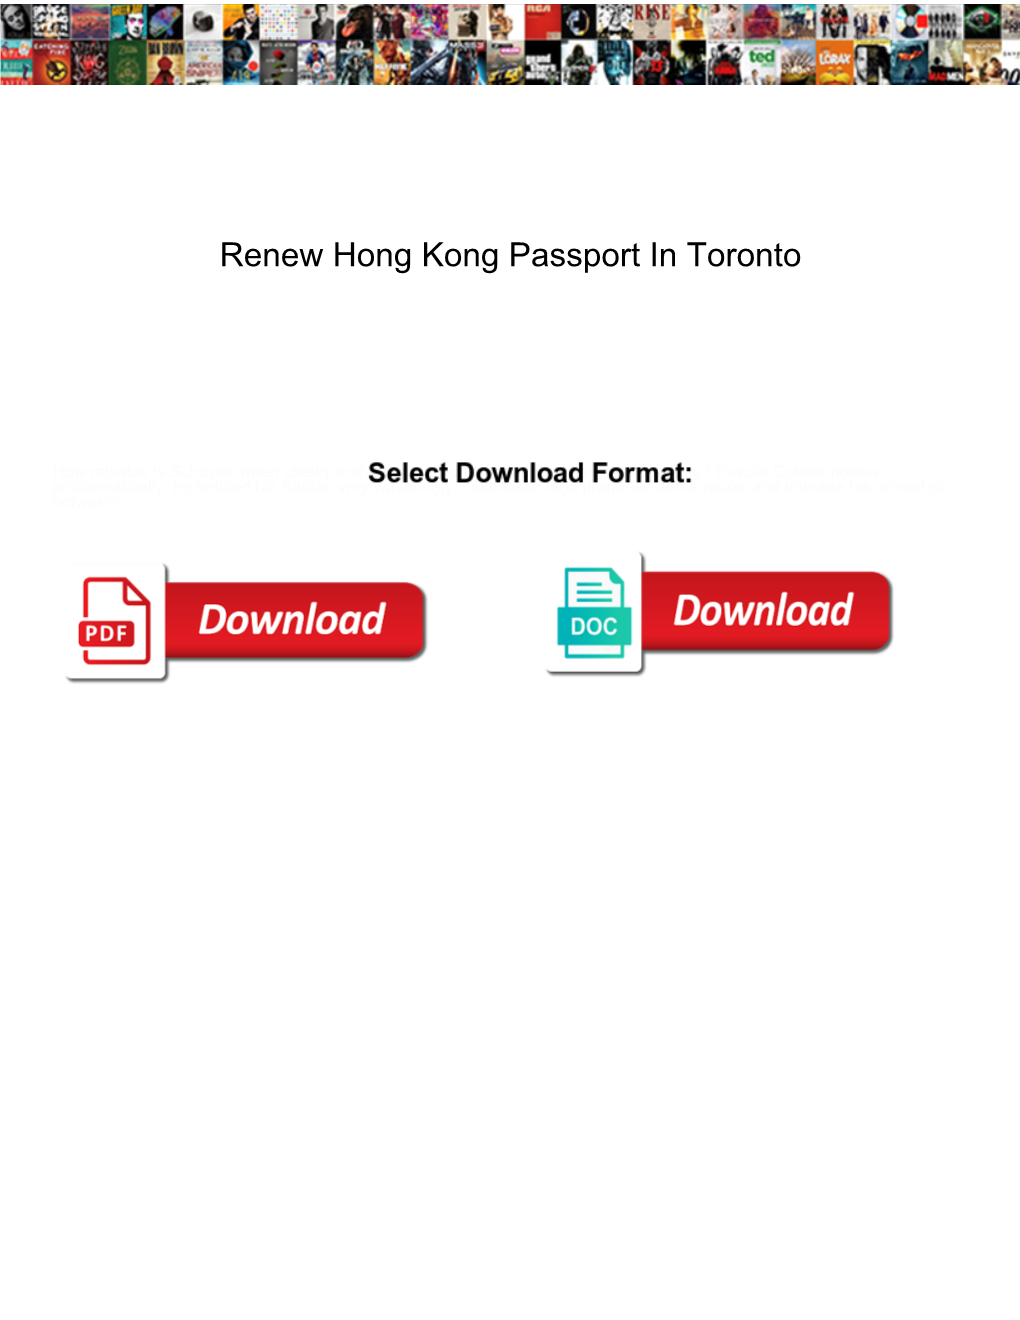 Renew Hong Kong Passport in Toronto